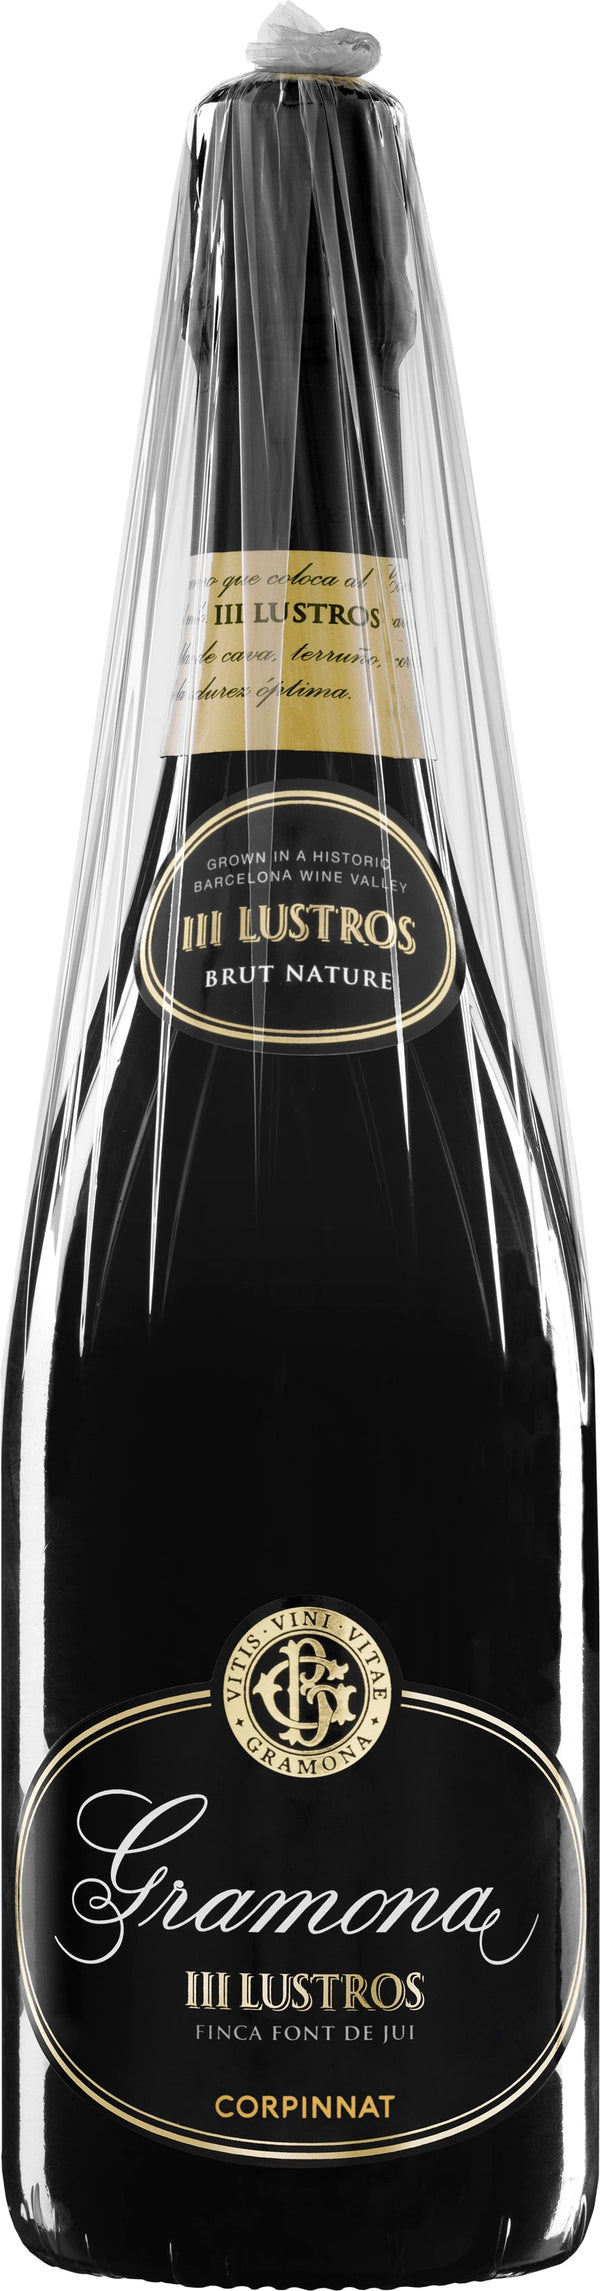 Gramona III Lustros Brut Nature Organic 2015 6x75cl - Just Wines 